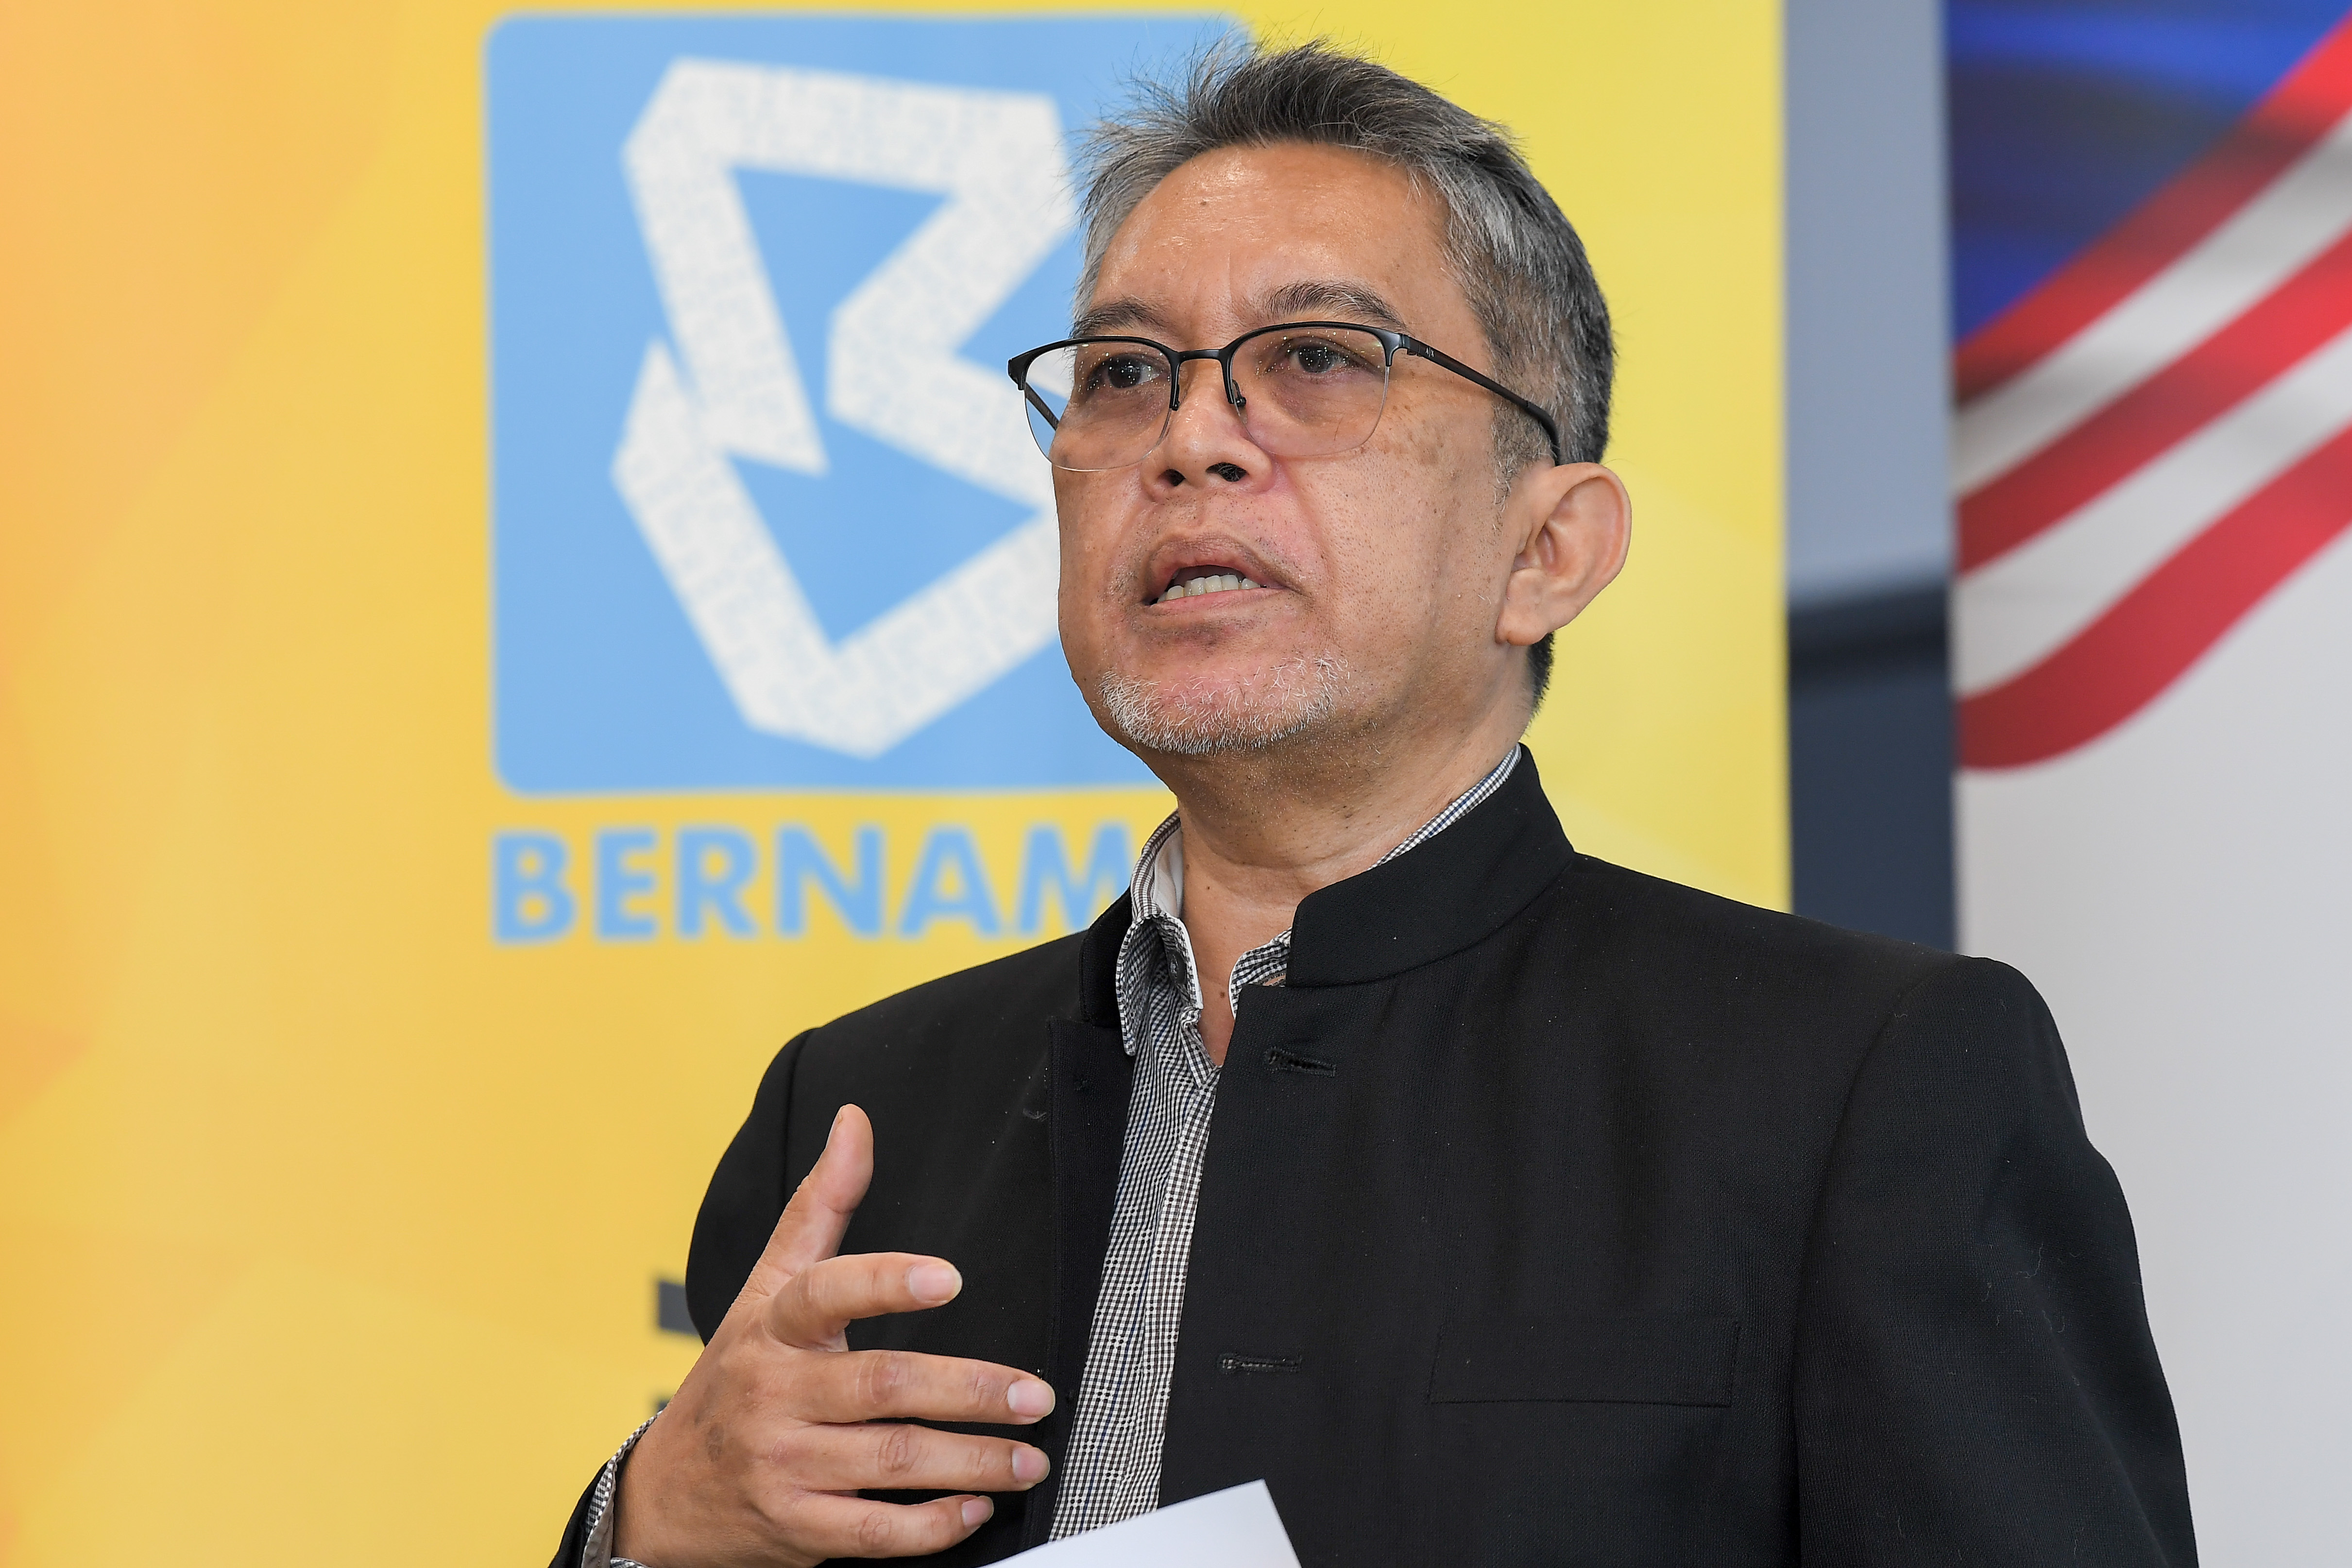 Abdul Rahman Ahmad is New Bernama Editor-in-Chief